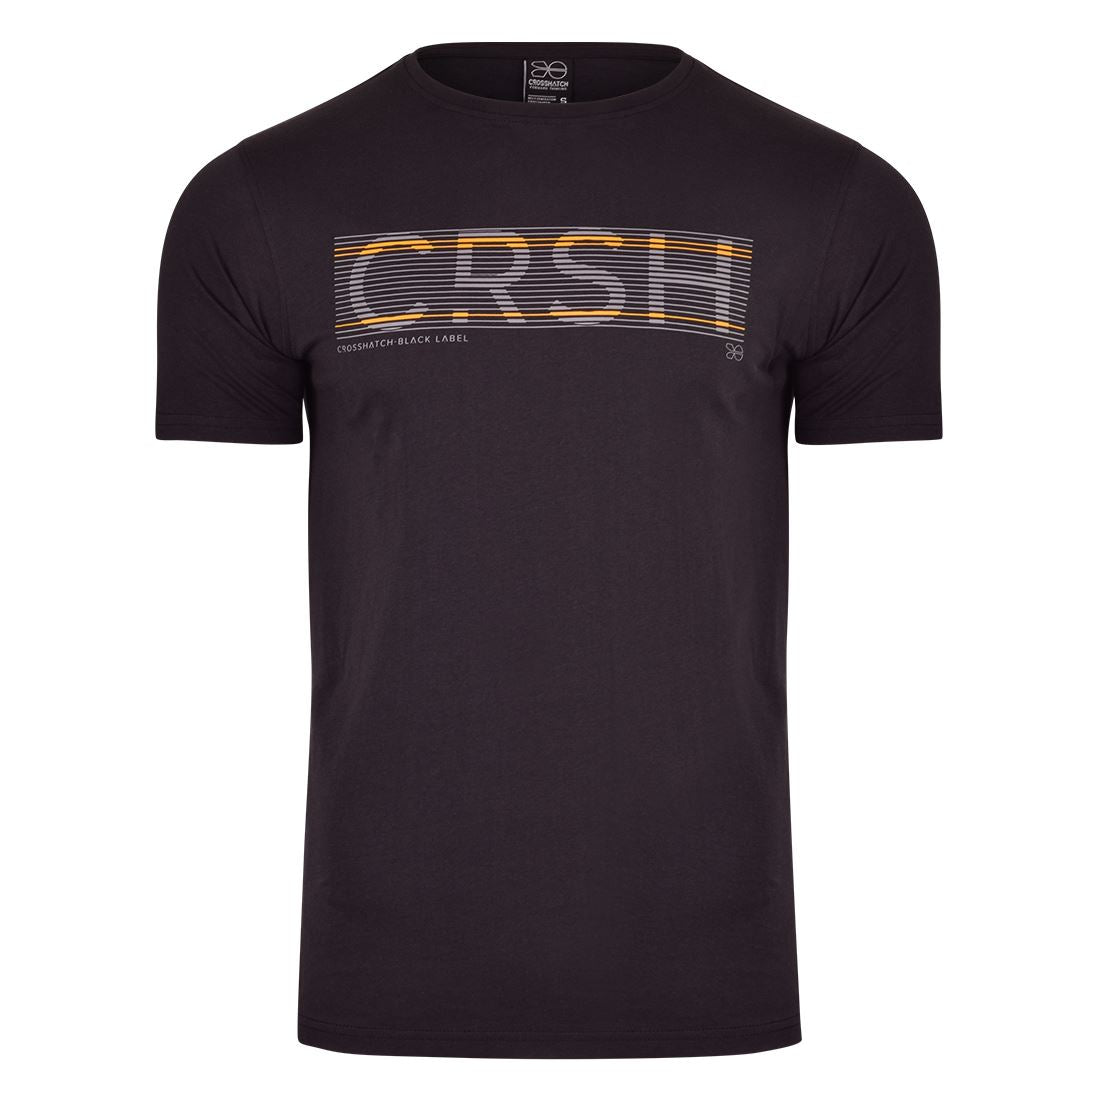 Crosshatch Mens T-Shirt Crew Neck Short Sleeve Tee Branded Designer Print Top